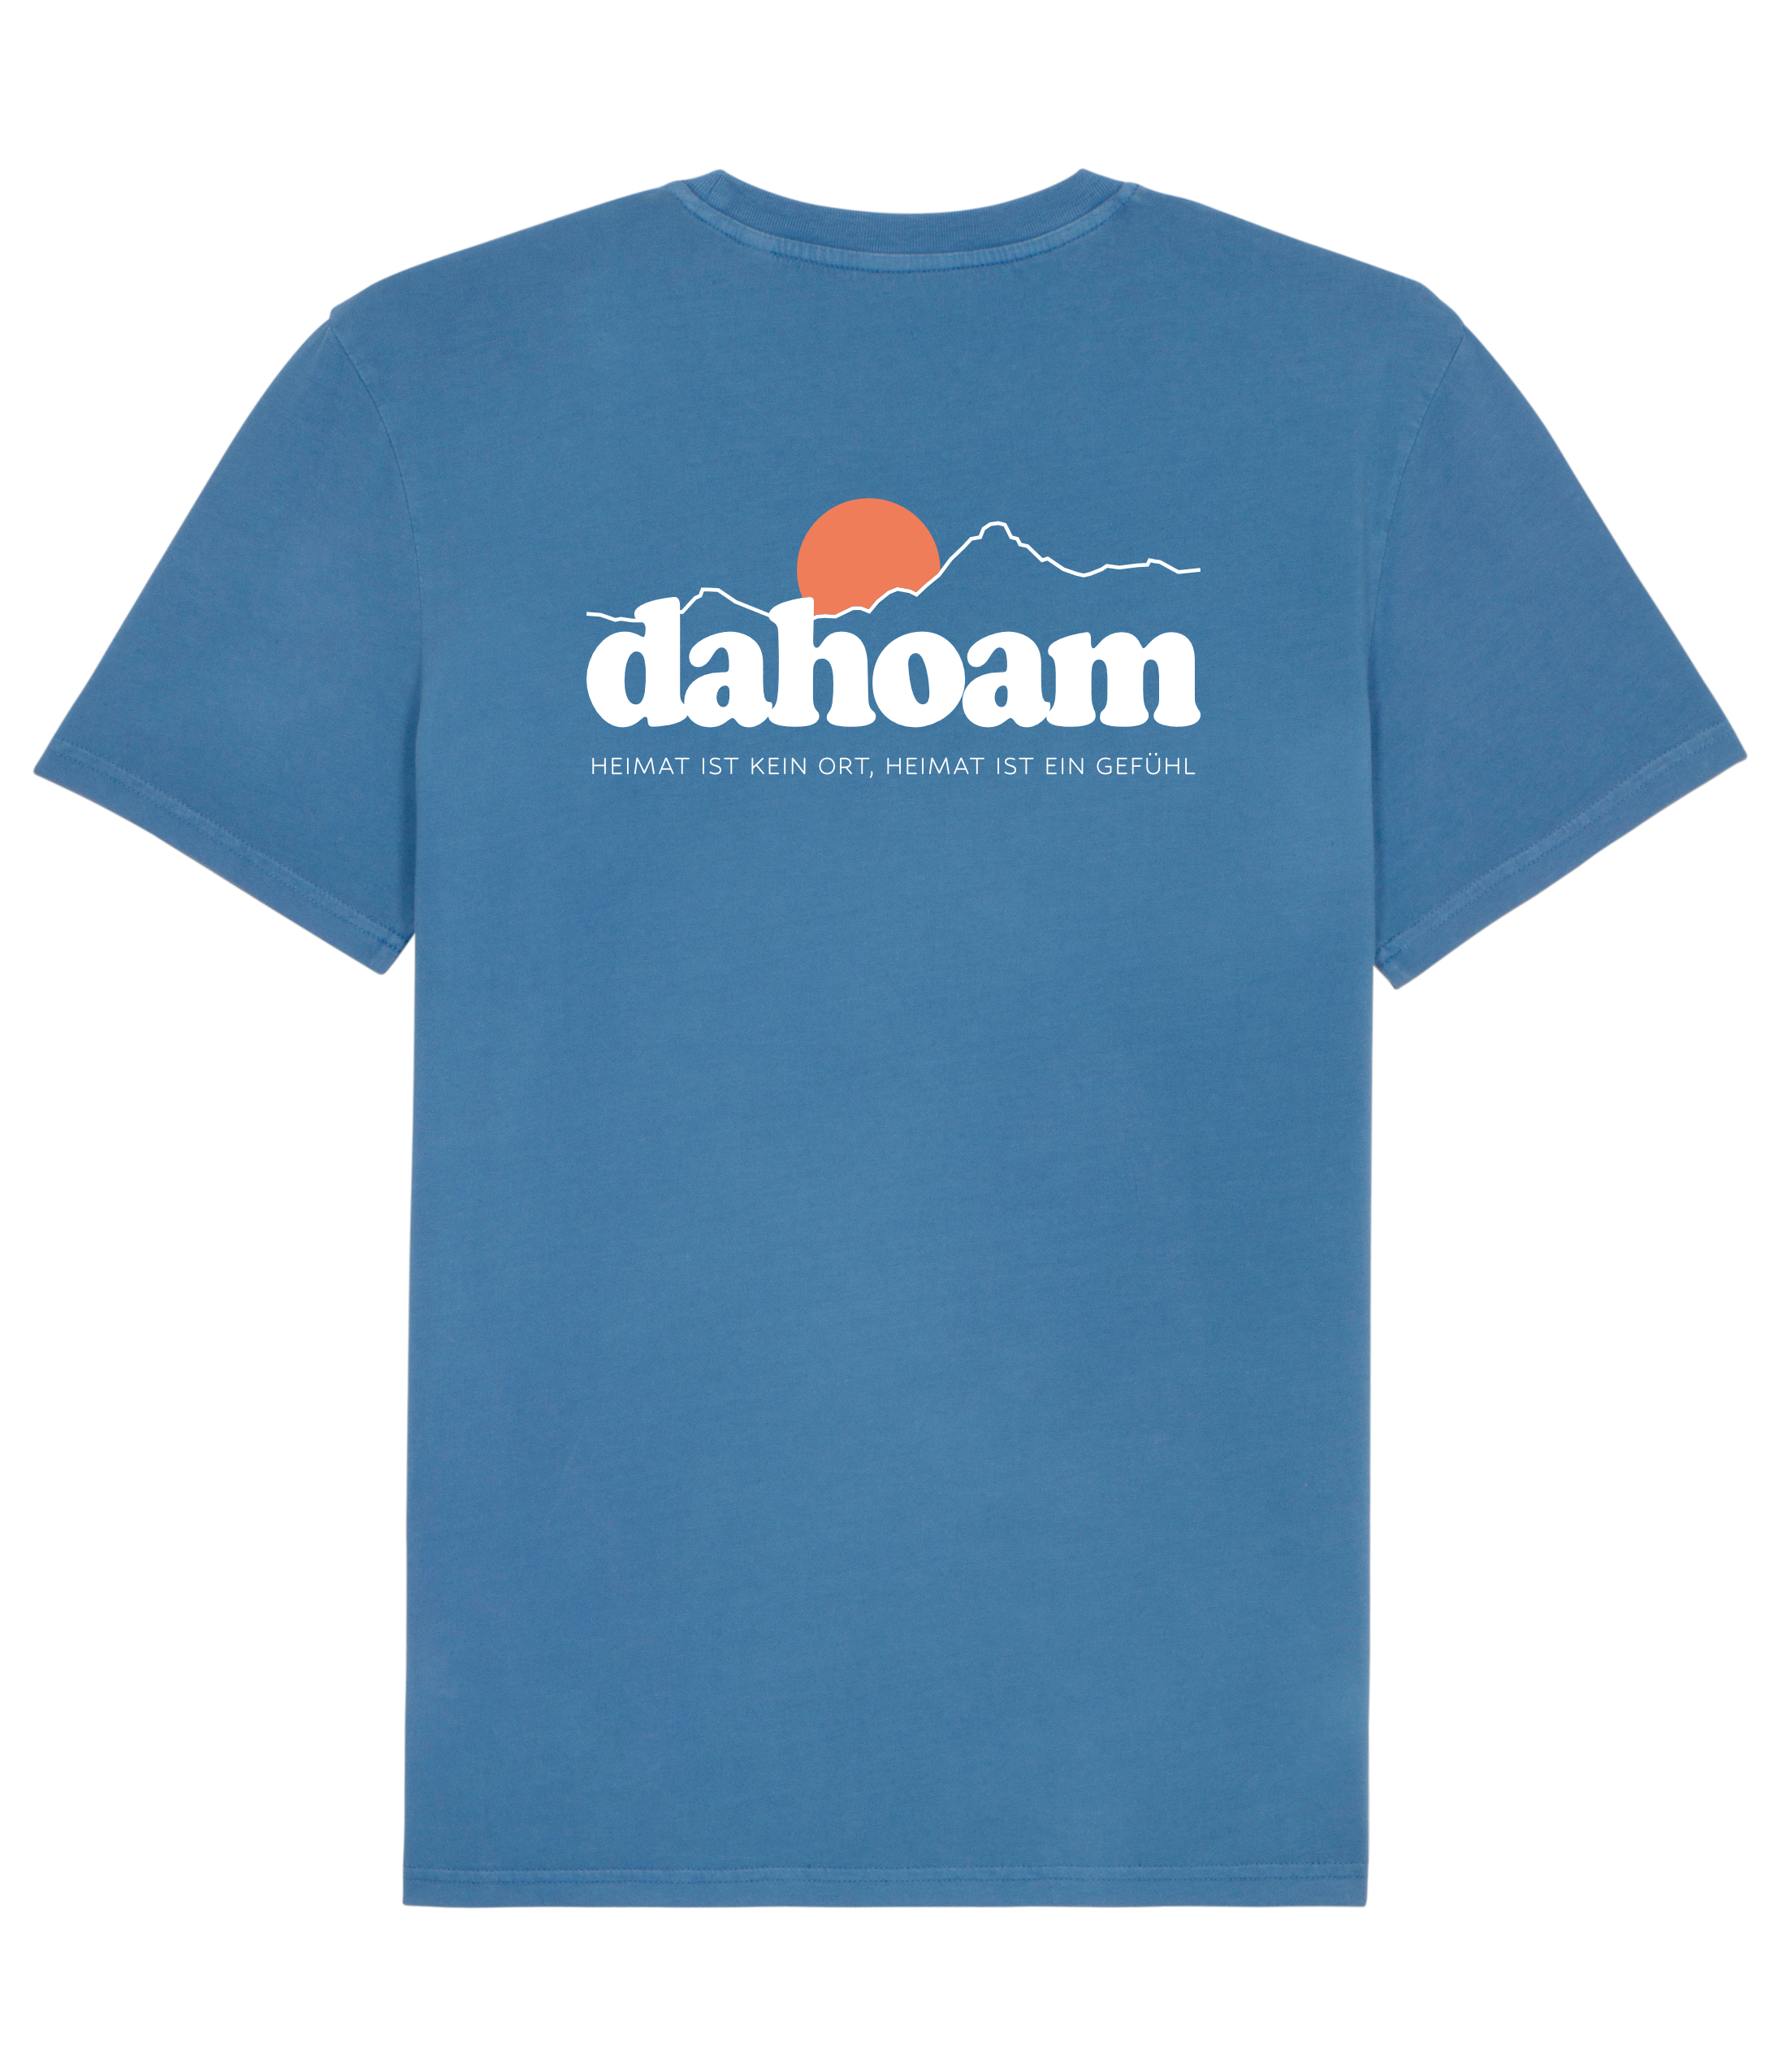 DAHOAM 2.0 SHIRT